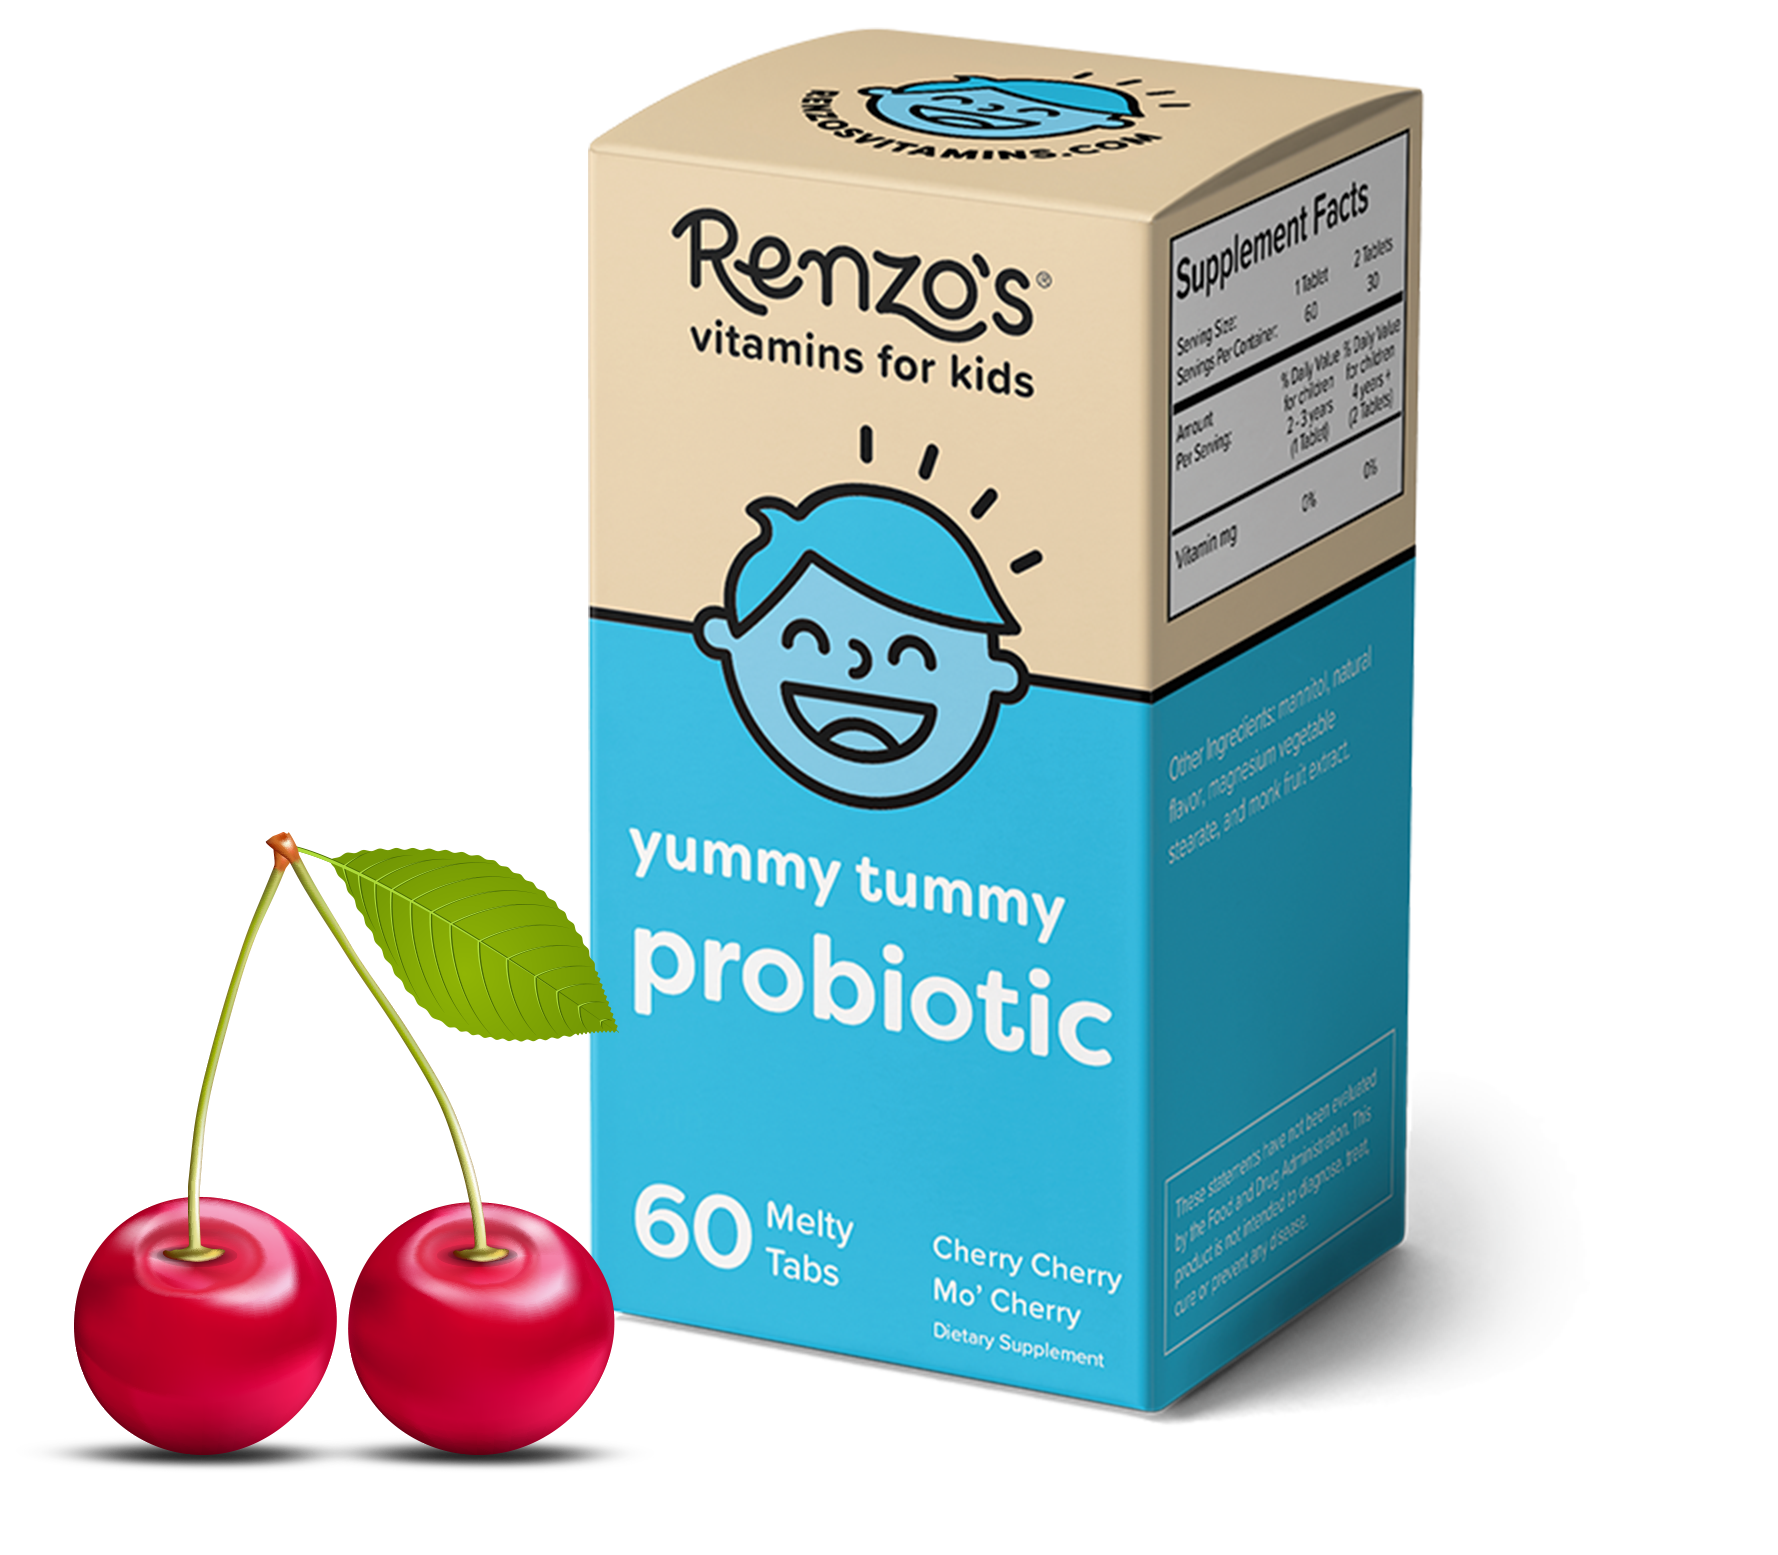 Yummy Tummy Probiotic box